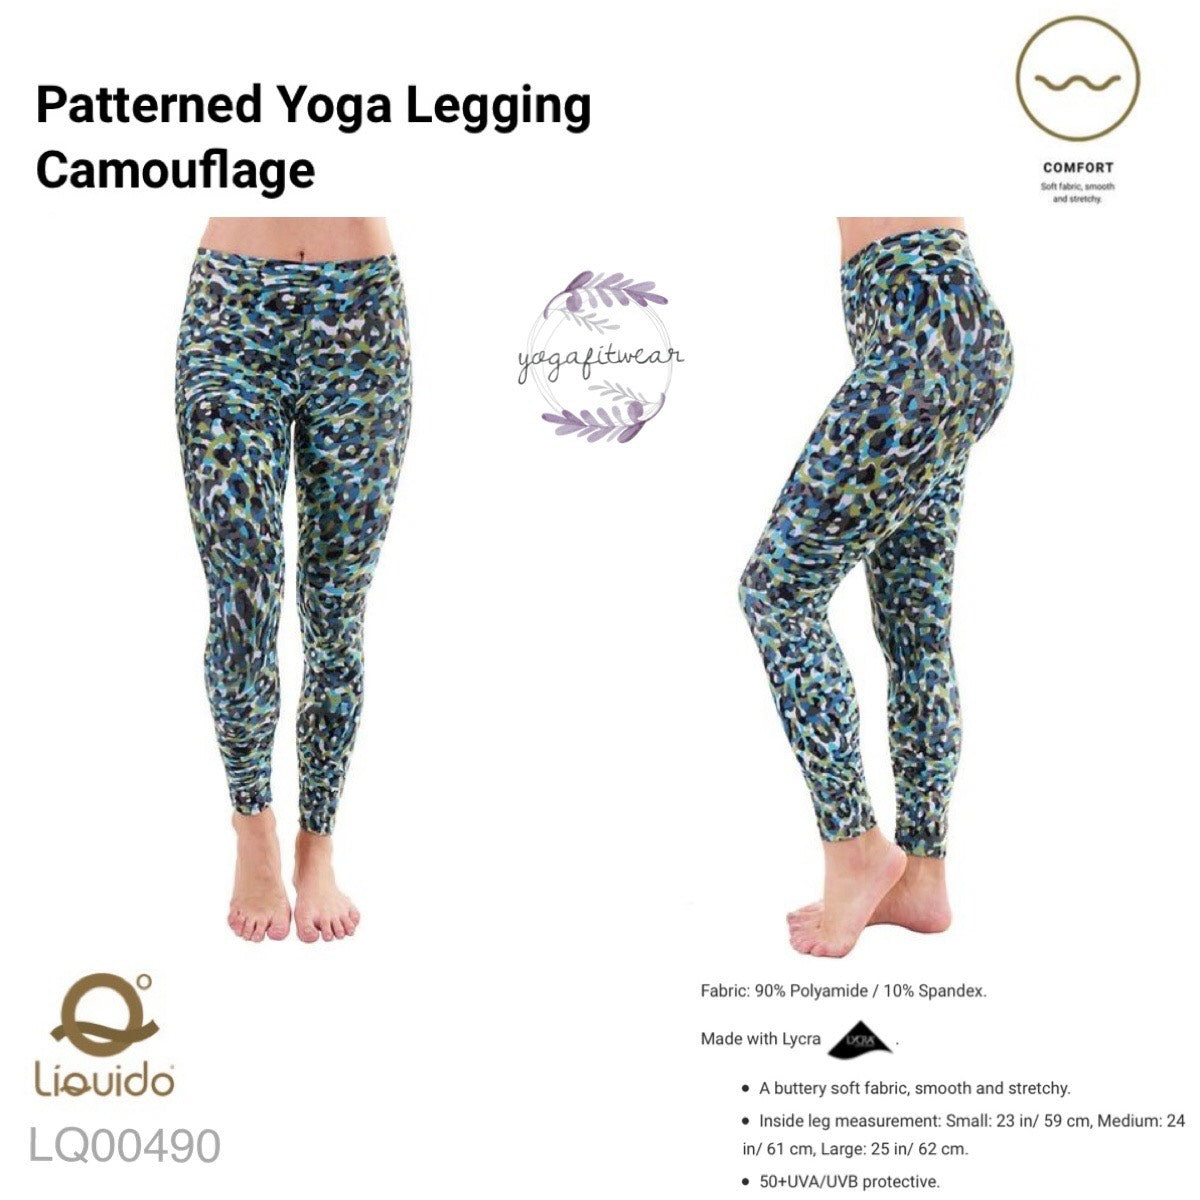 Liquido : Patterned Yoga Legging -Camouflage (LQ00490)